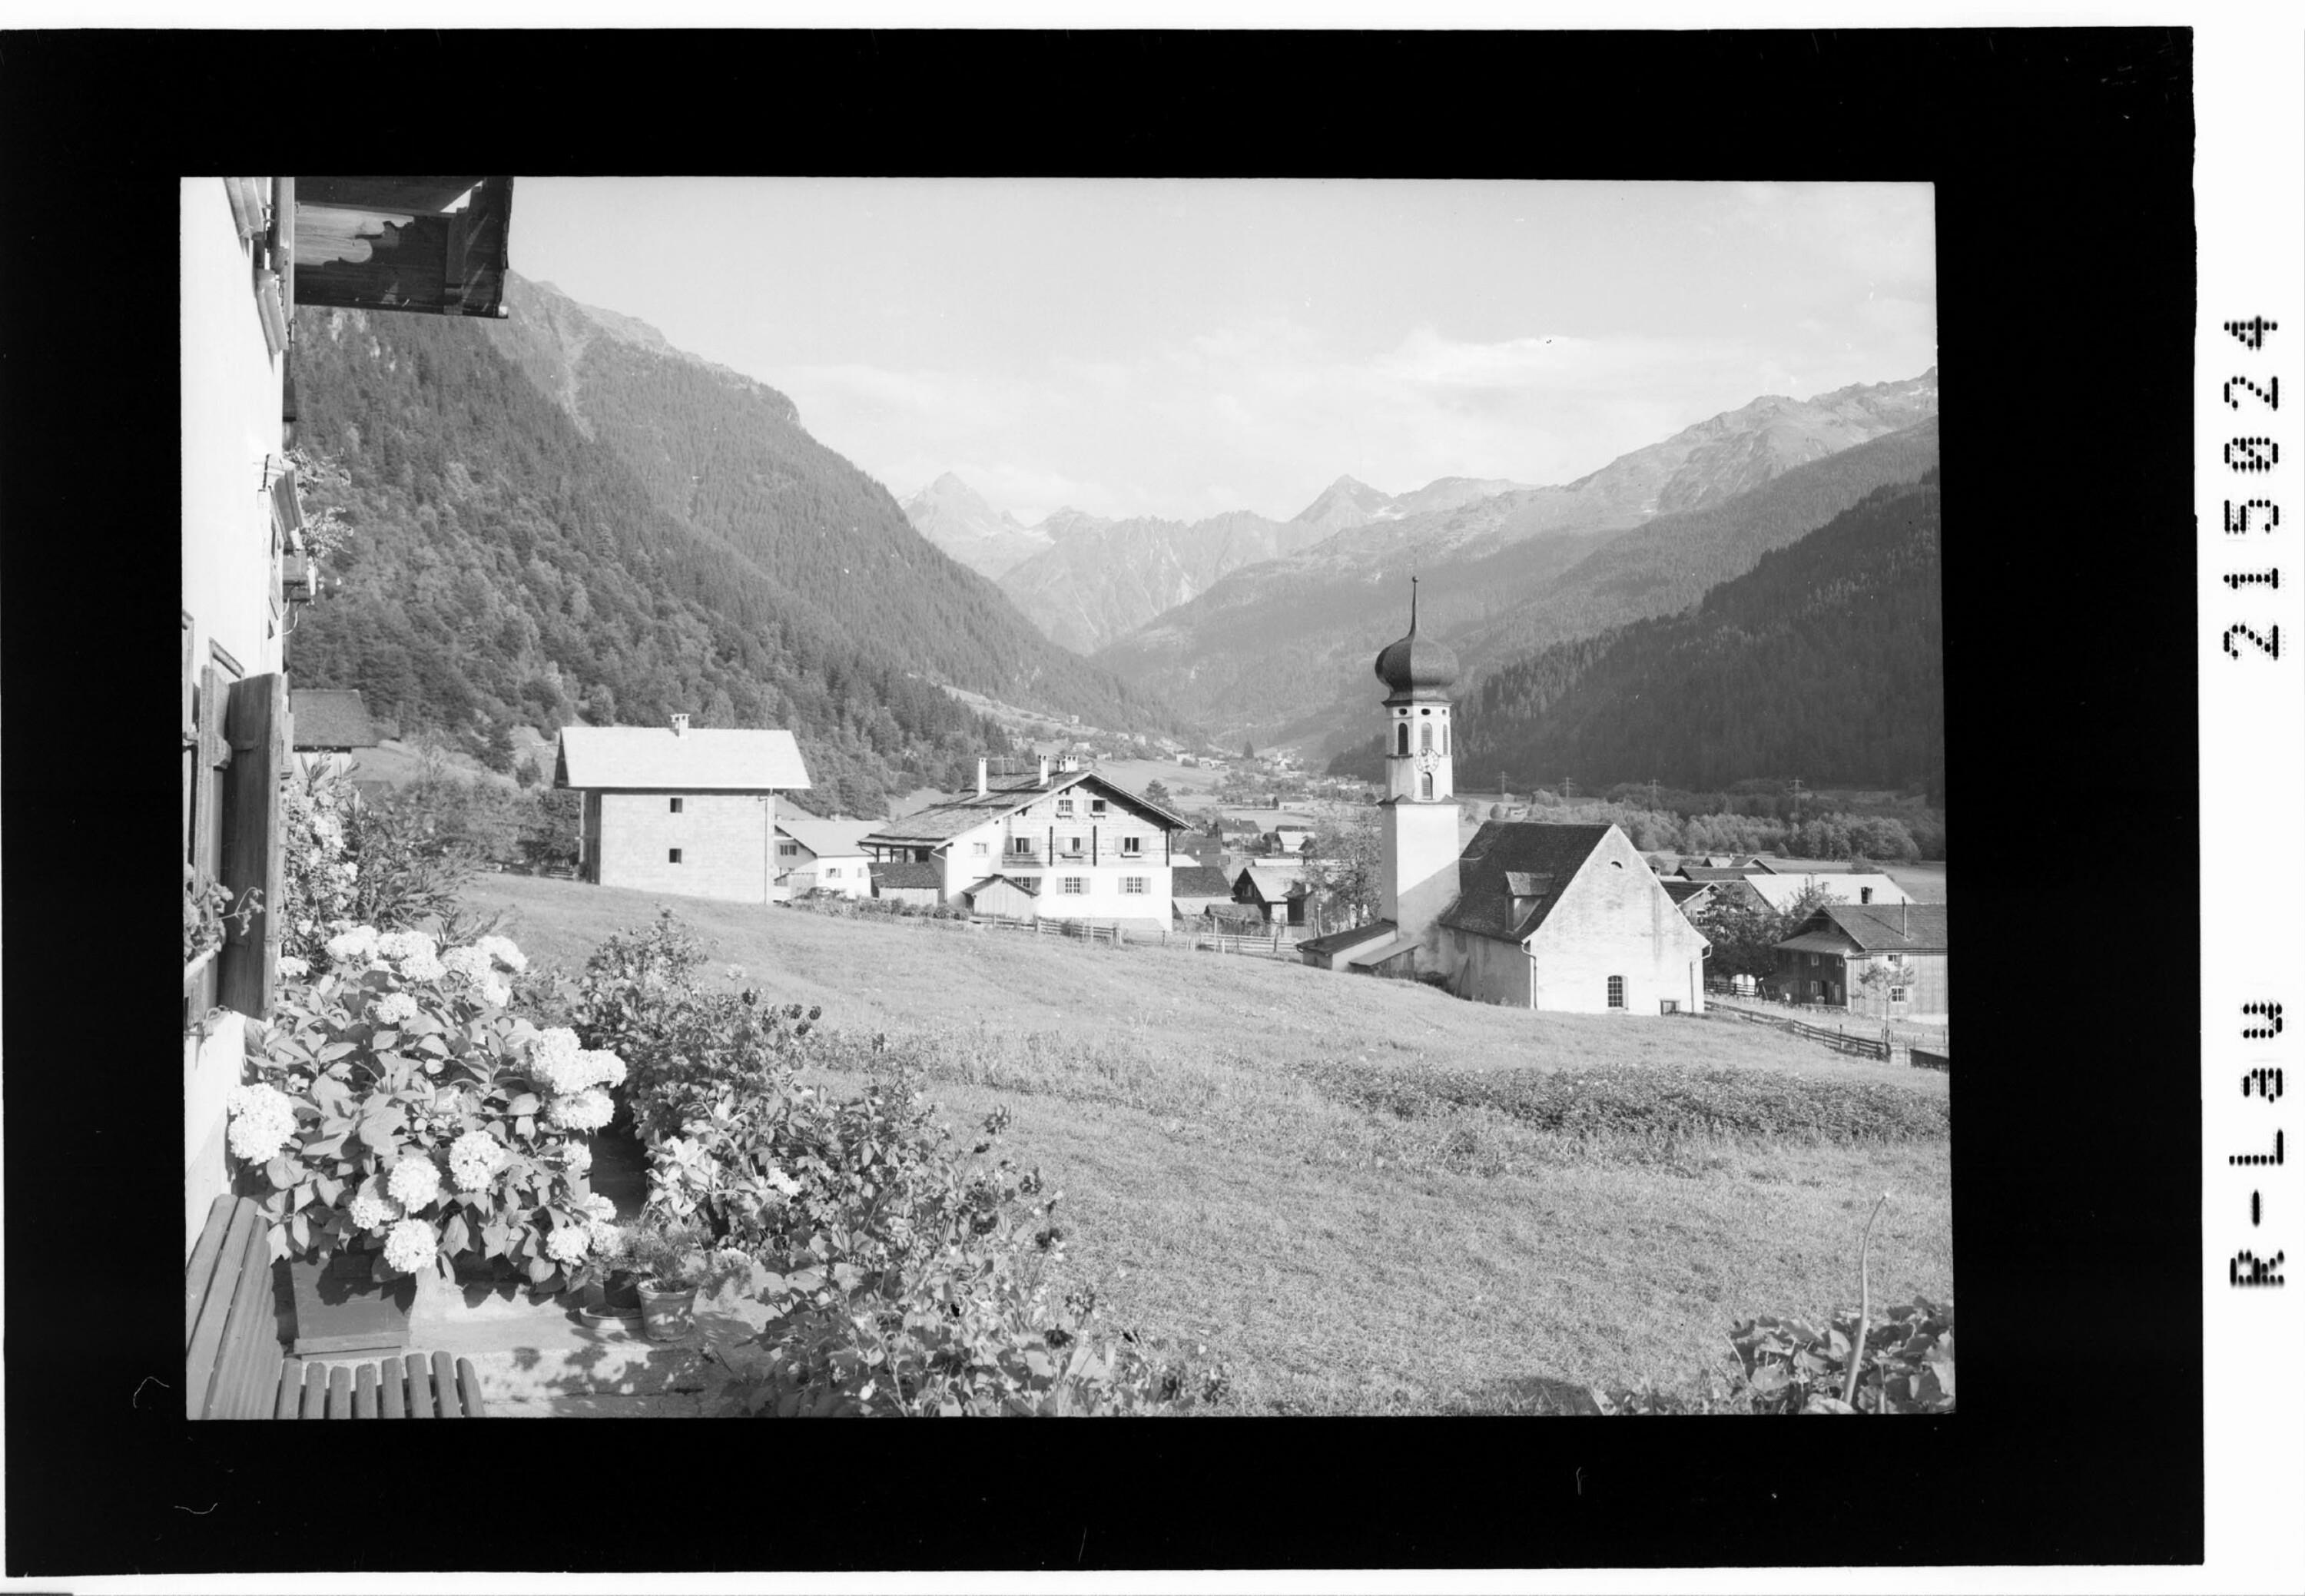 Gortipohl im Montafon Vorarlberg></div>


    <hr>
    <div class=